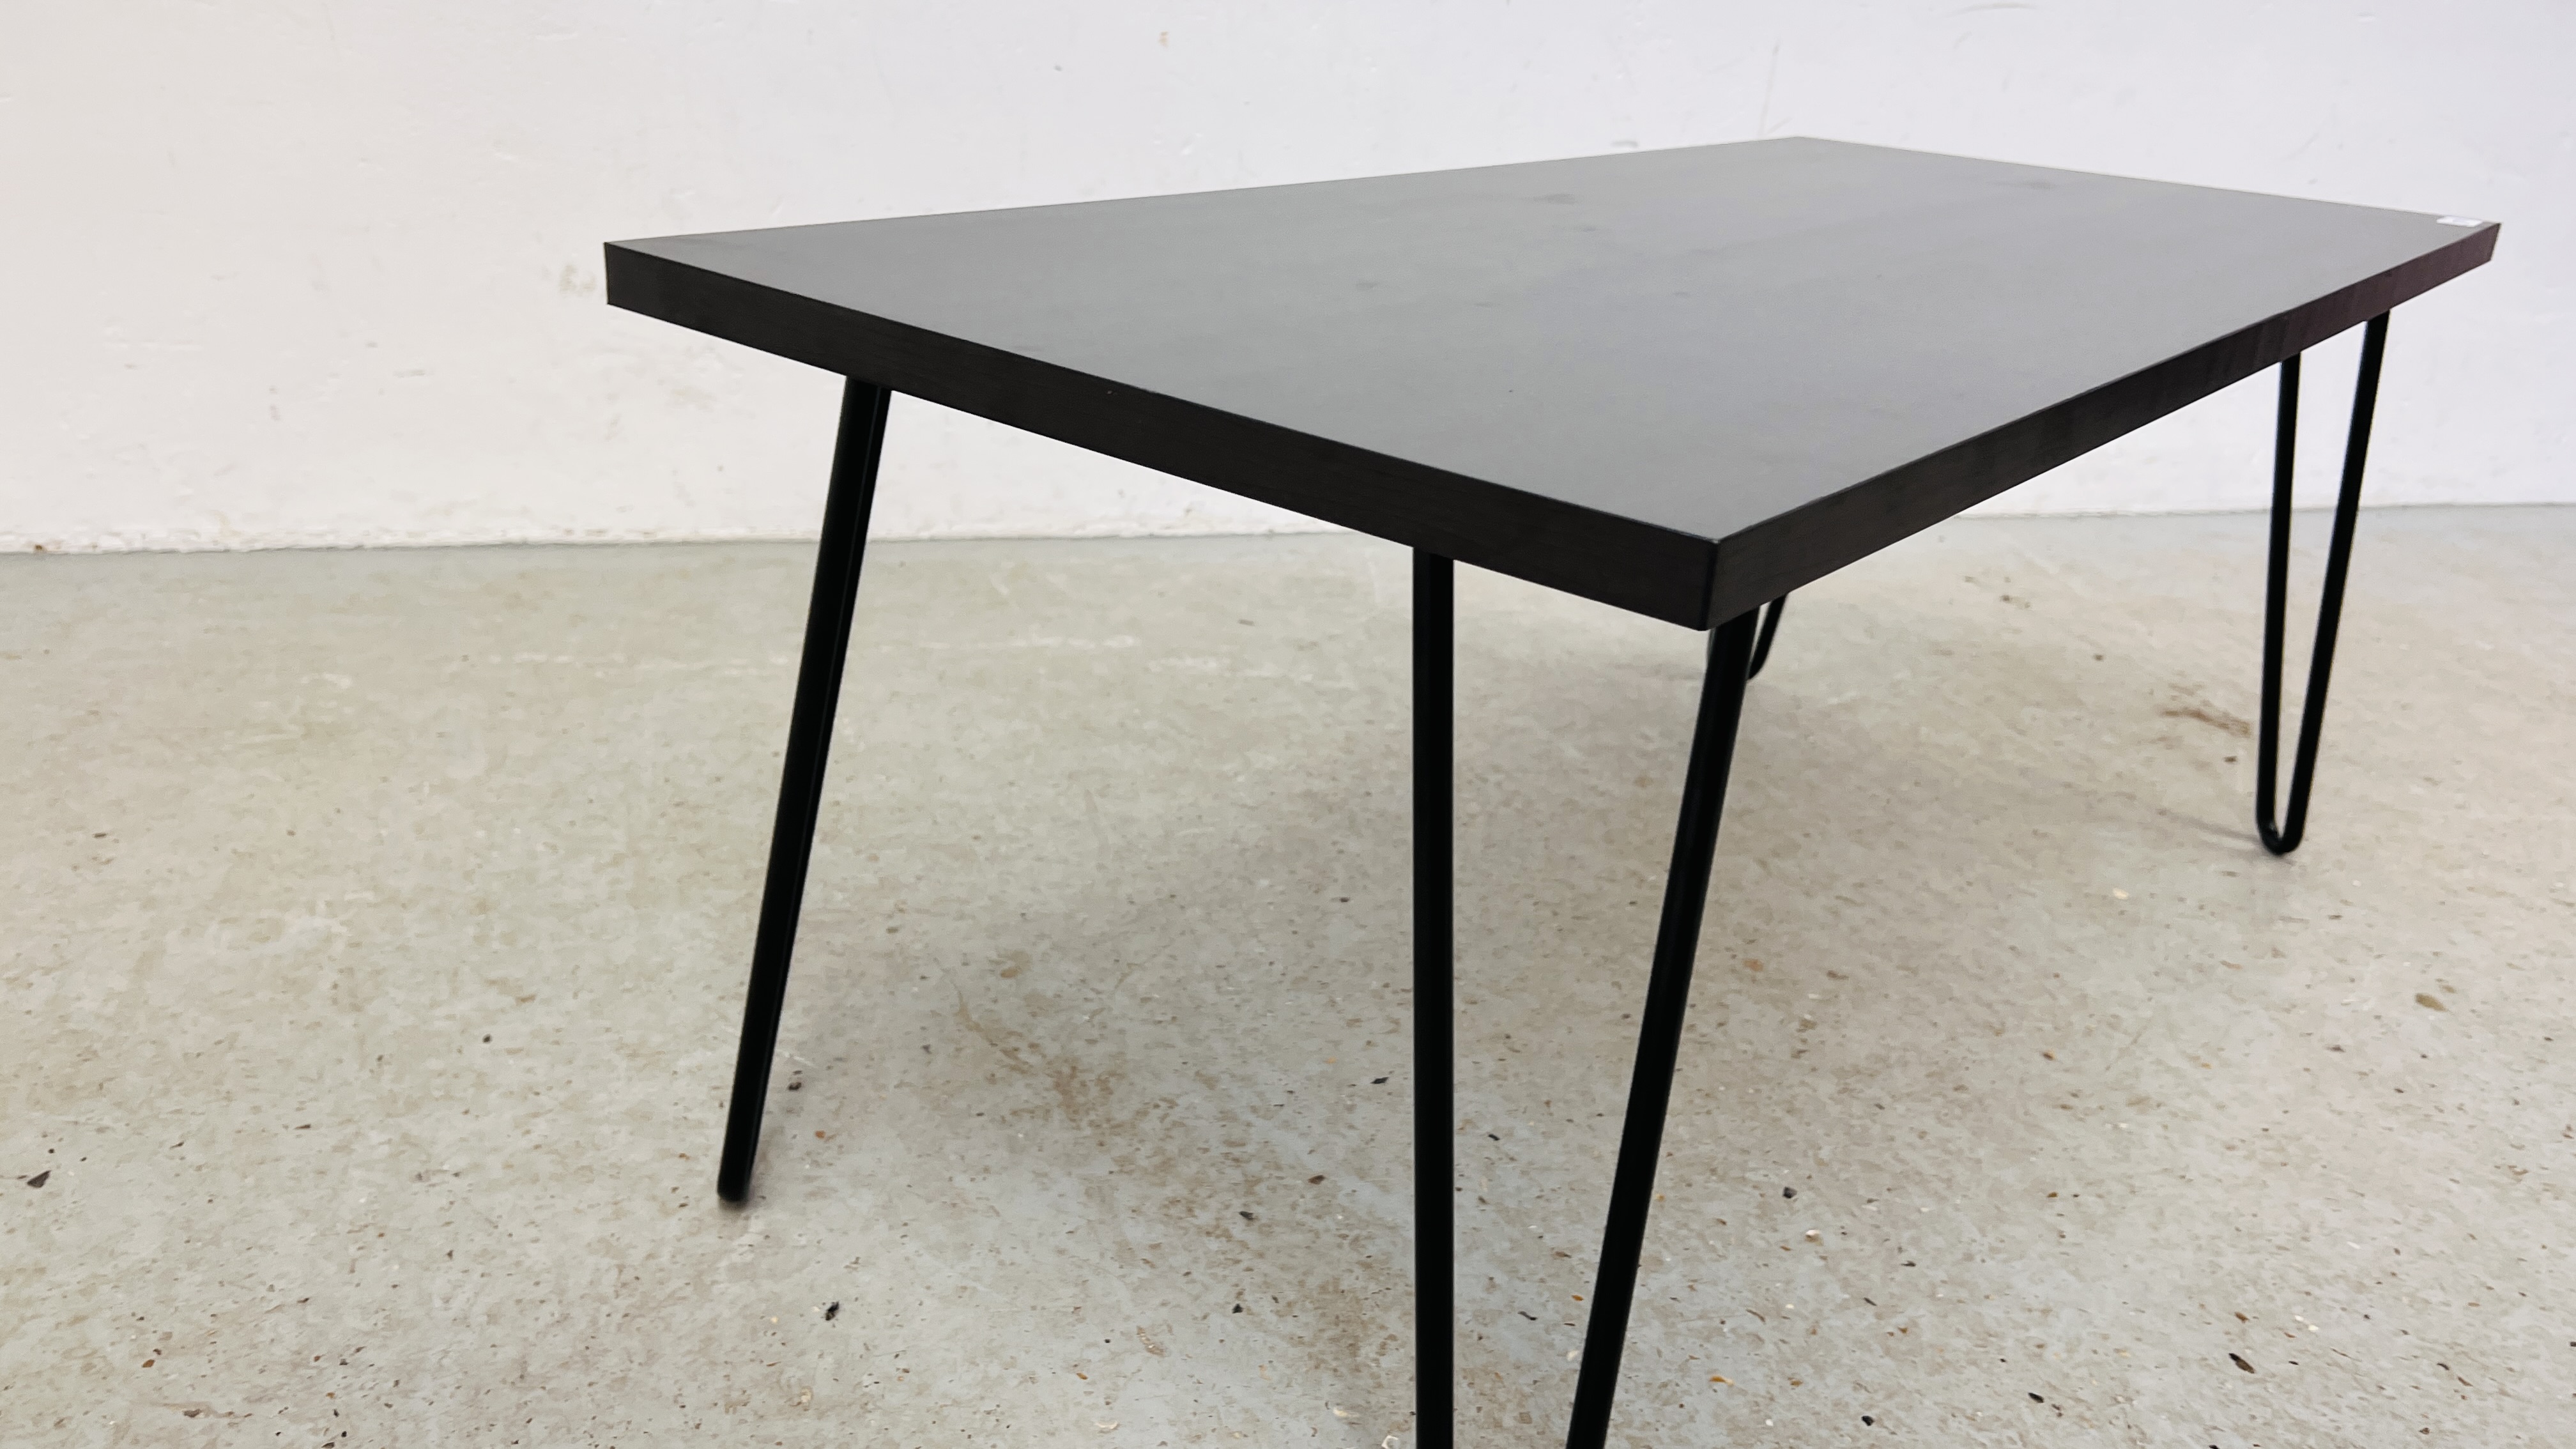 A MODERN RECTANGULAR COFFEE TABLE ON METAL U LEGS - Image 8 of 8